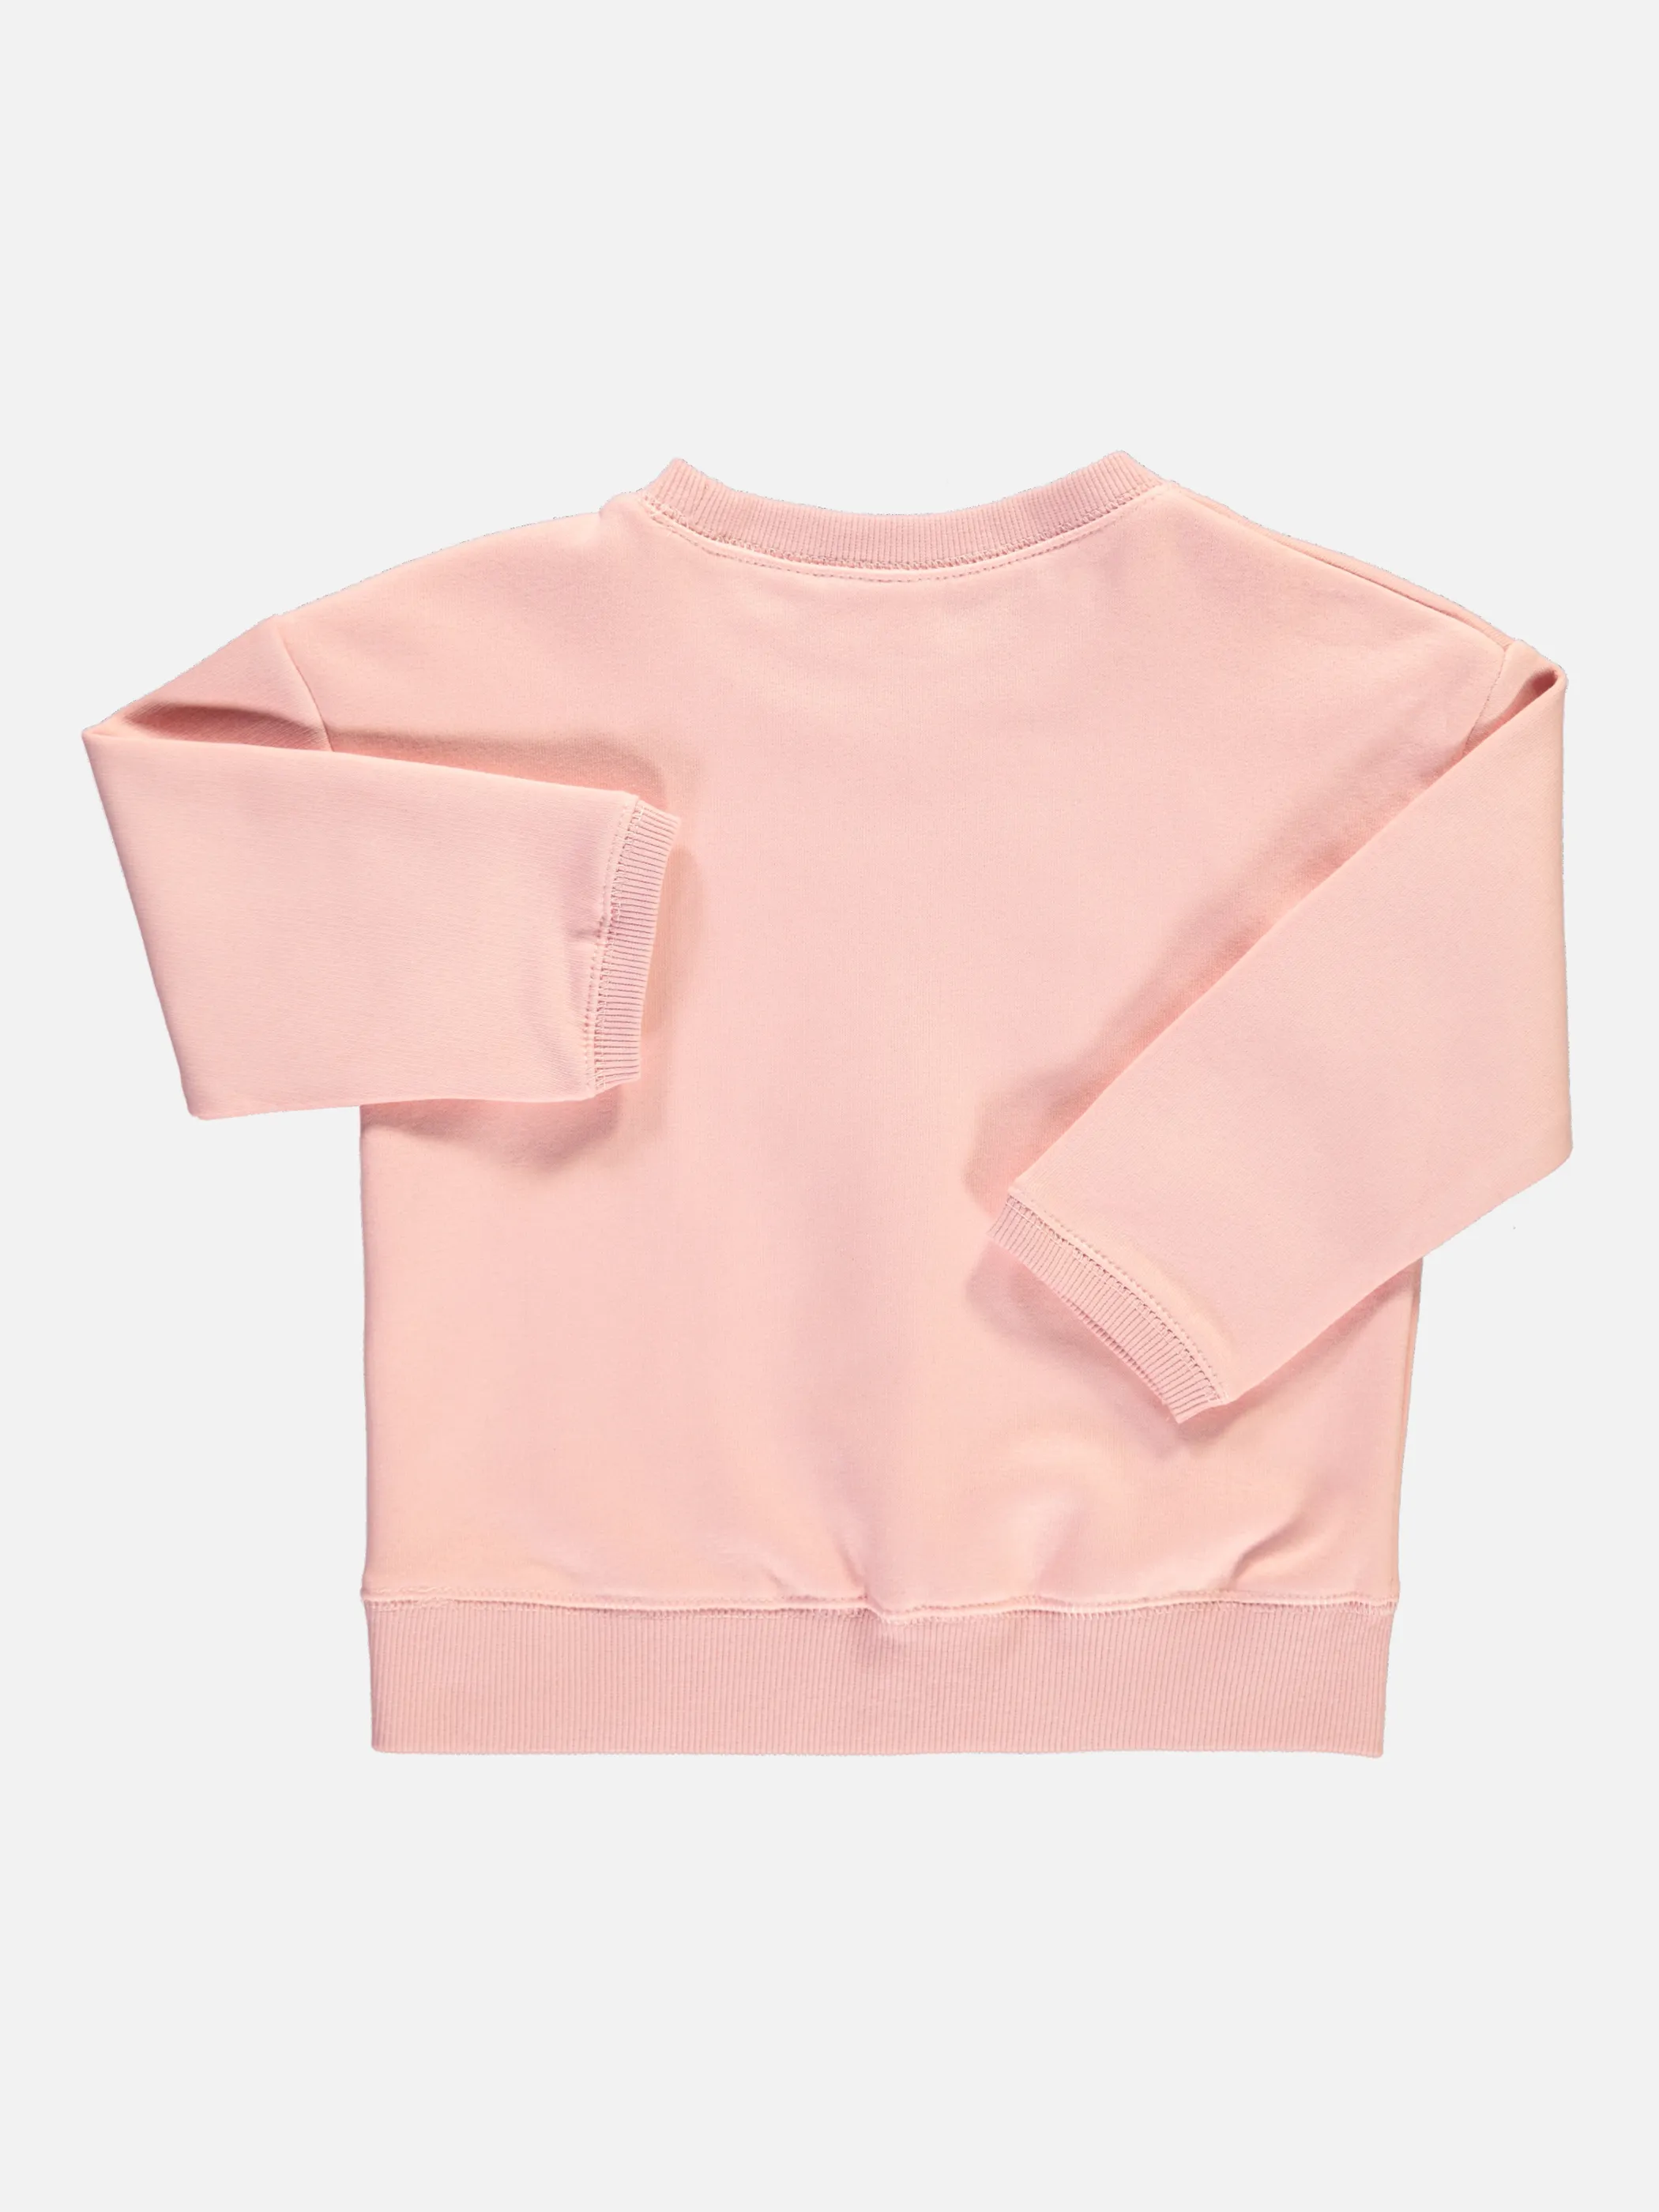 Stop + Go MG Sweatshirt in pink mit Pink 842364 PINK 2